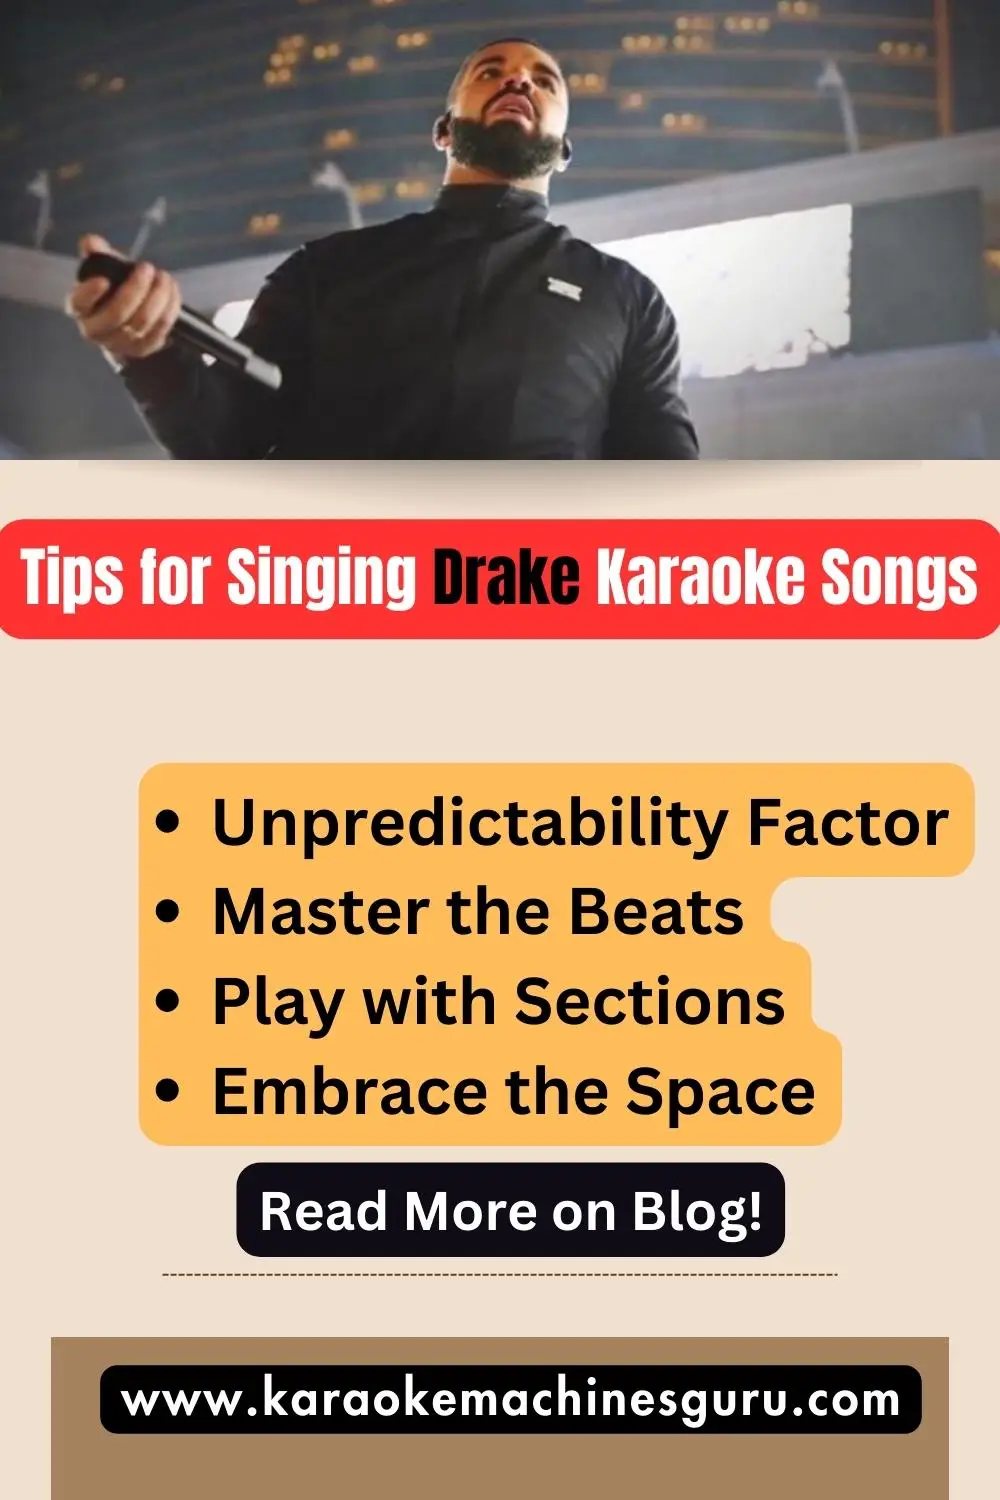 Tips for Singing Drake Songs